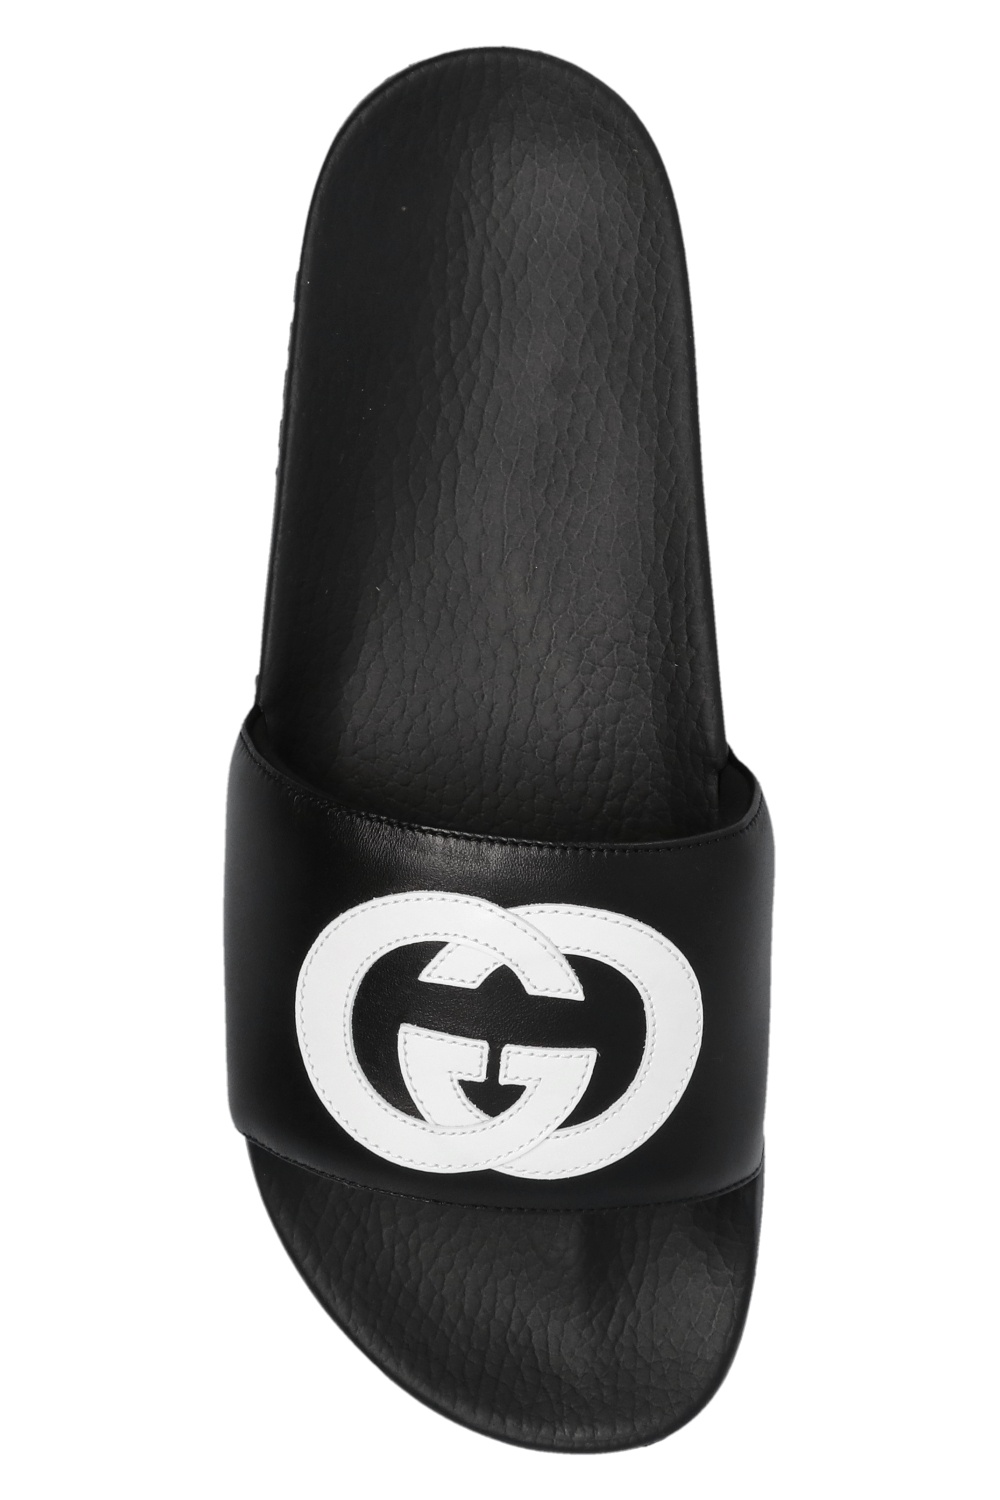 Gucci Gucci Horsebit 75mm mule sandals